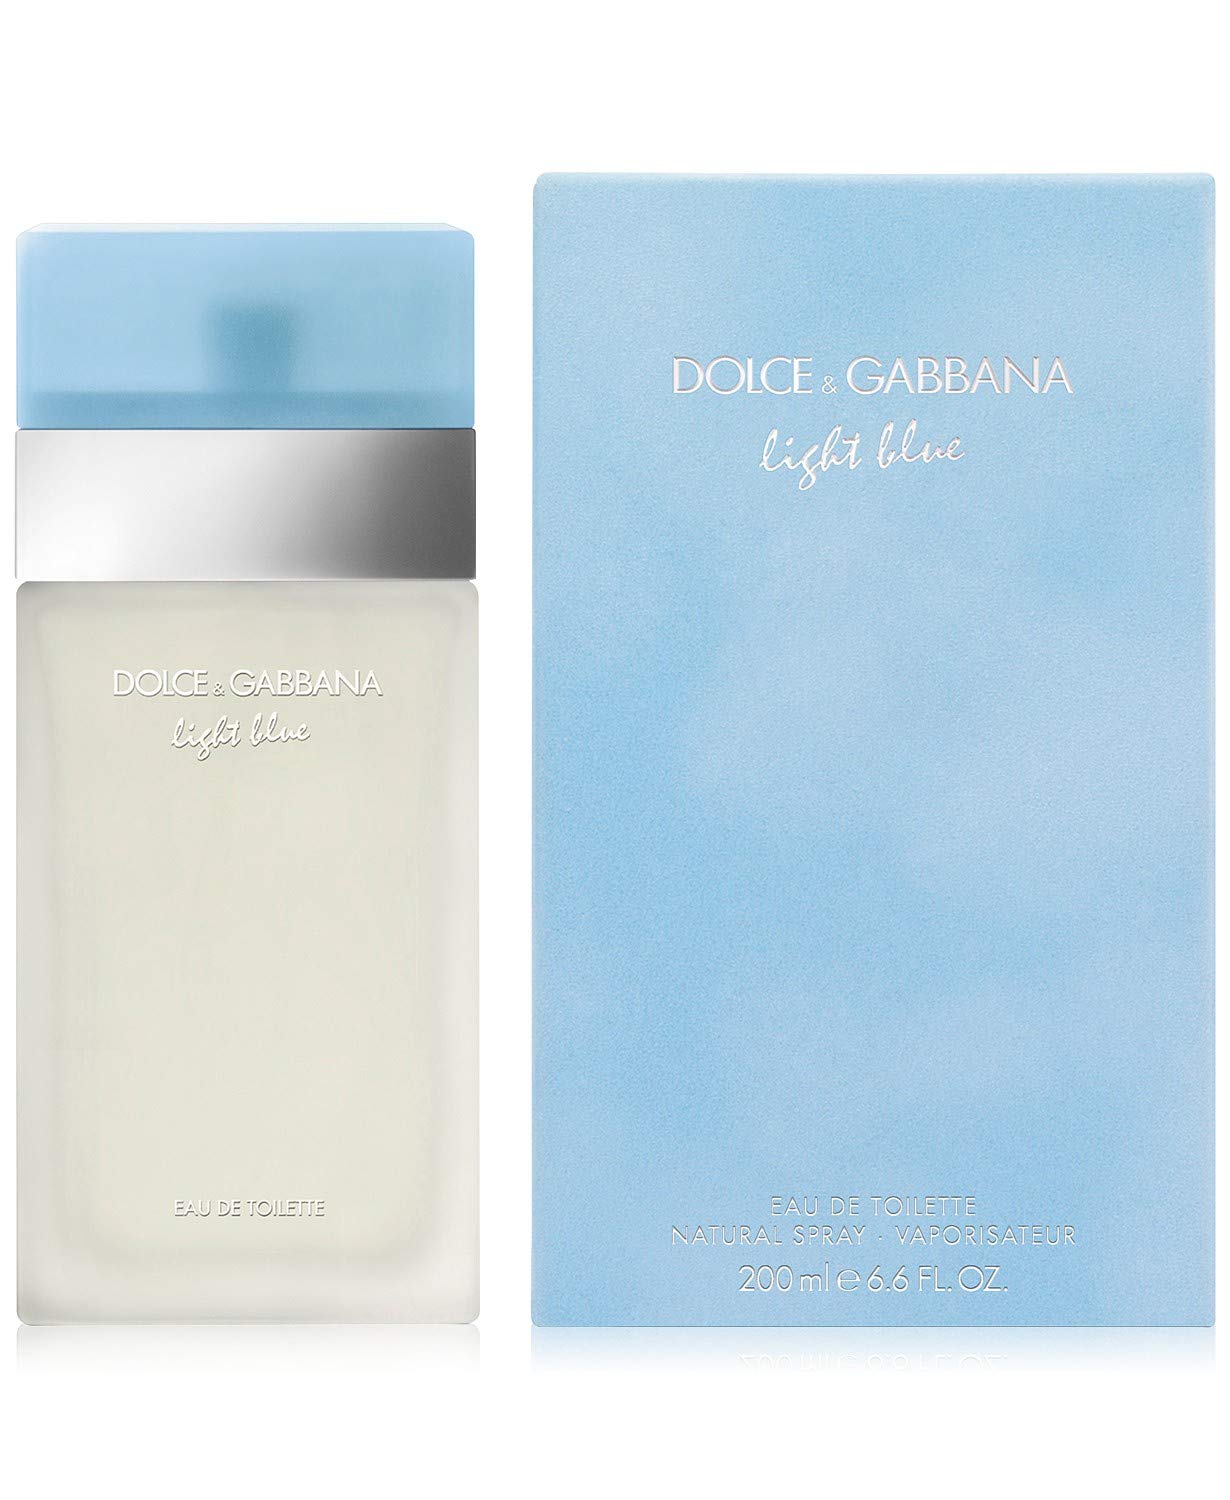 Dolce & Gabbana Light Blue / Dolce & Gabbana EDT Spray 6.7 oz (200